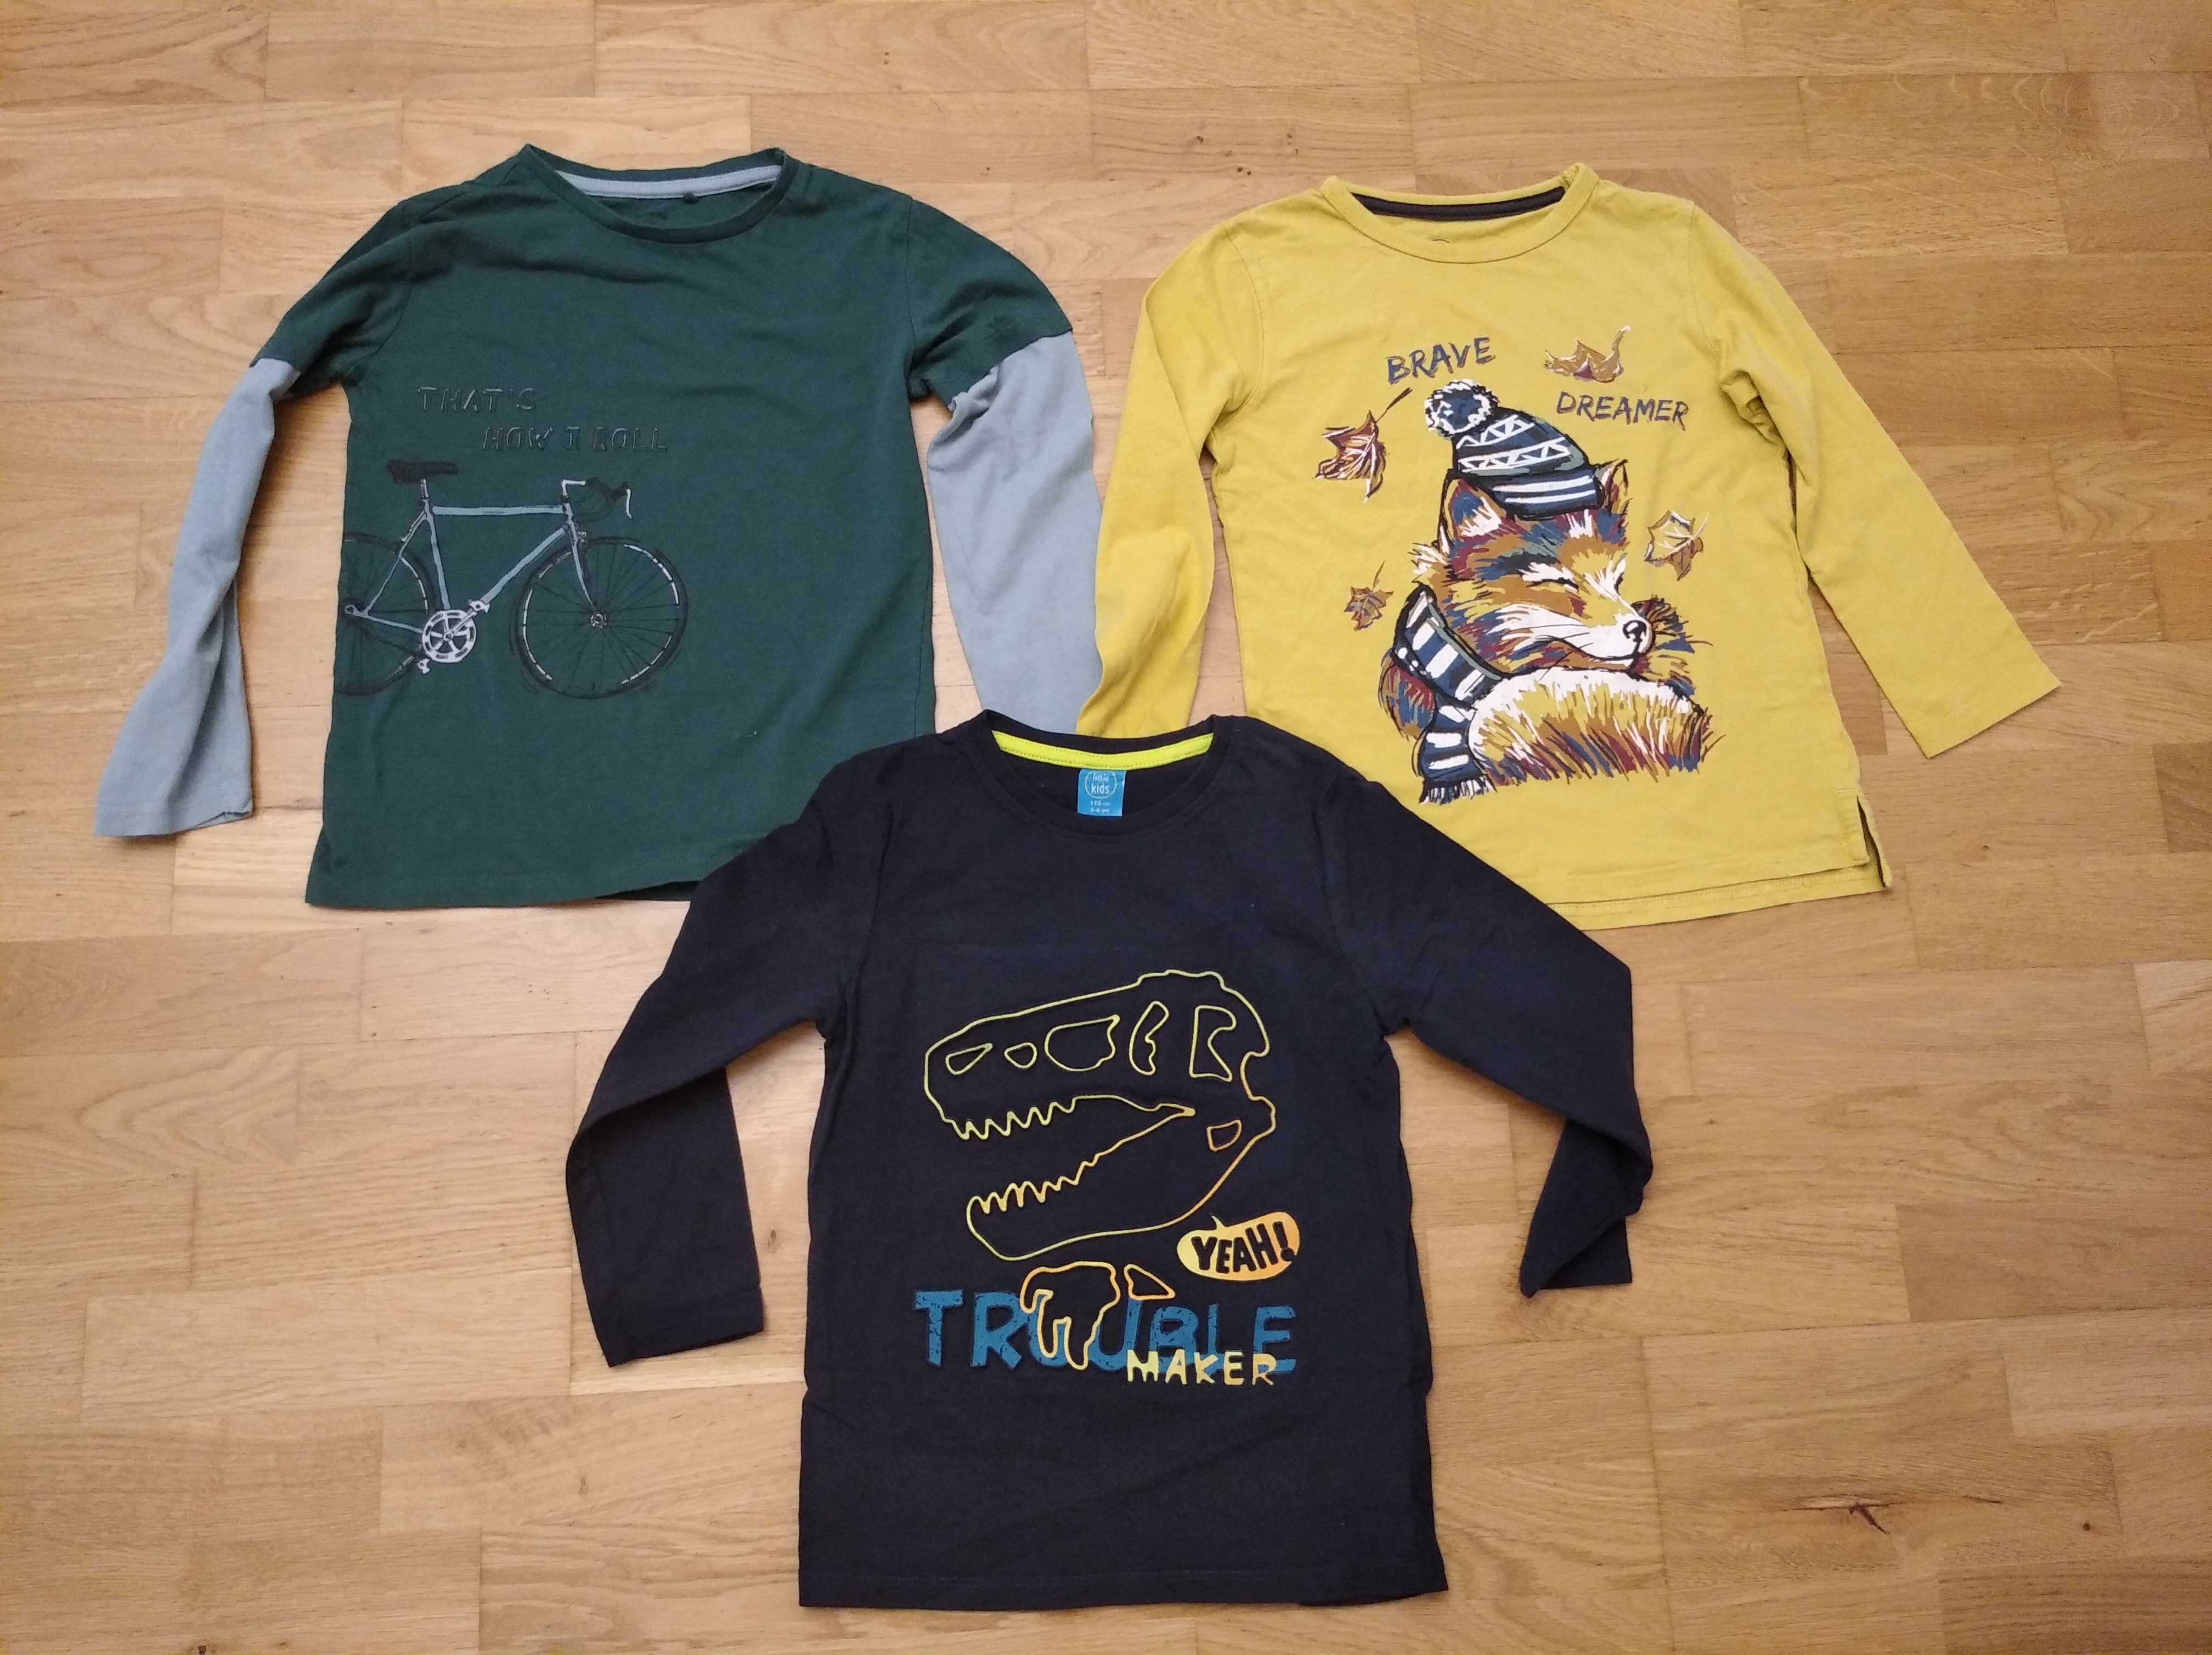 Bluzki chłopięce 116 3x Sinsay Little Kids koszulki dino rower lisek